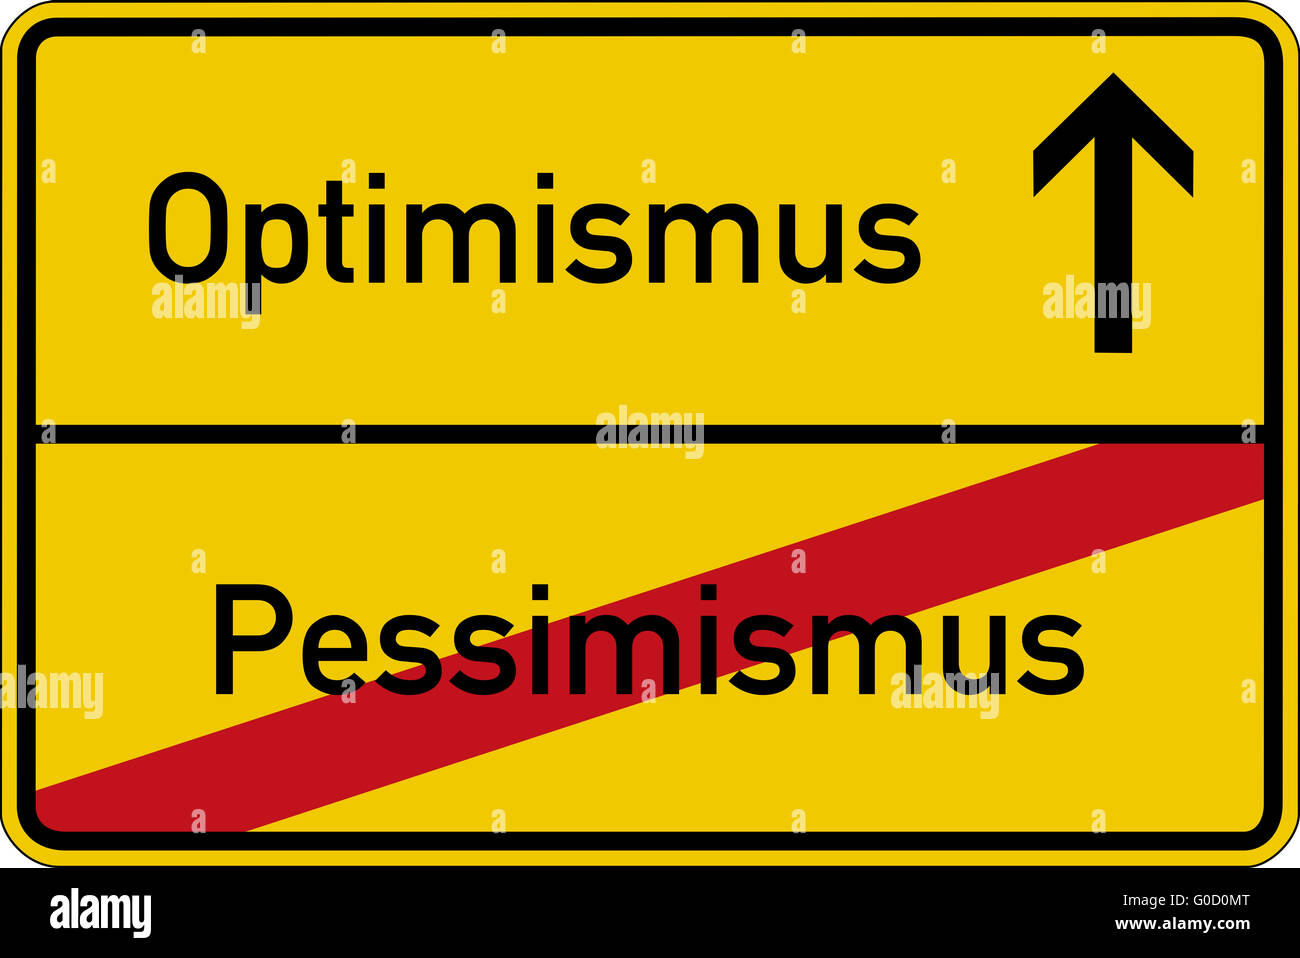 Pessimism and Optimism Stock Photo